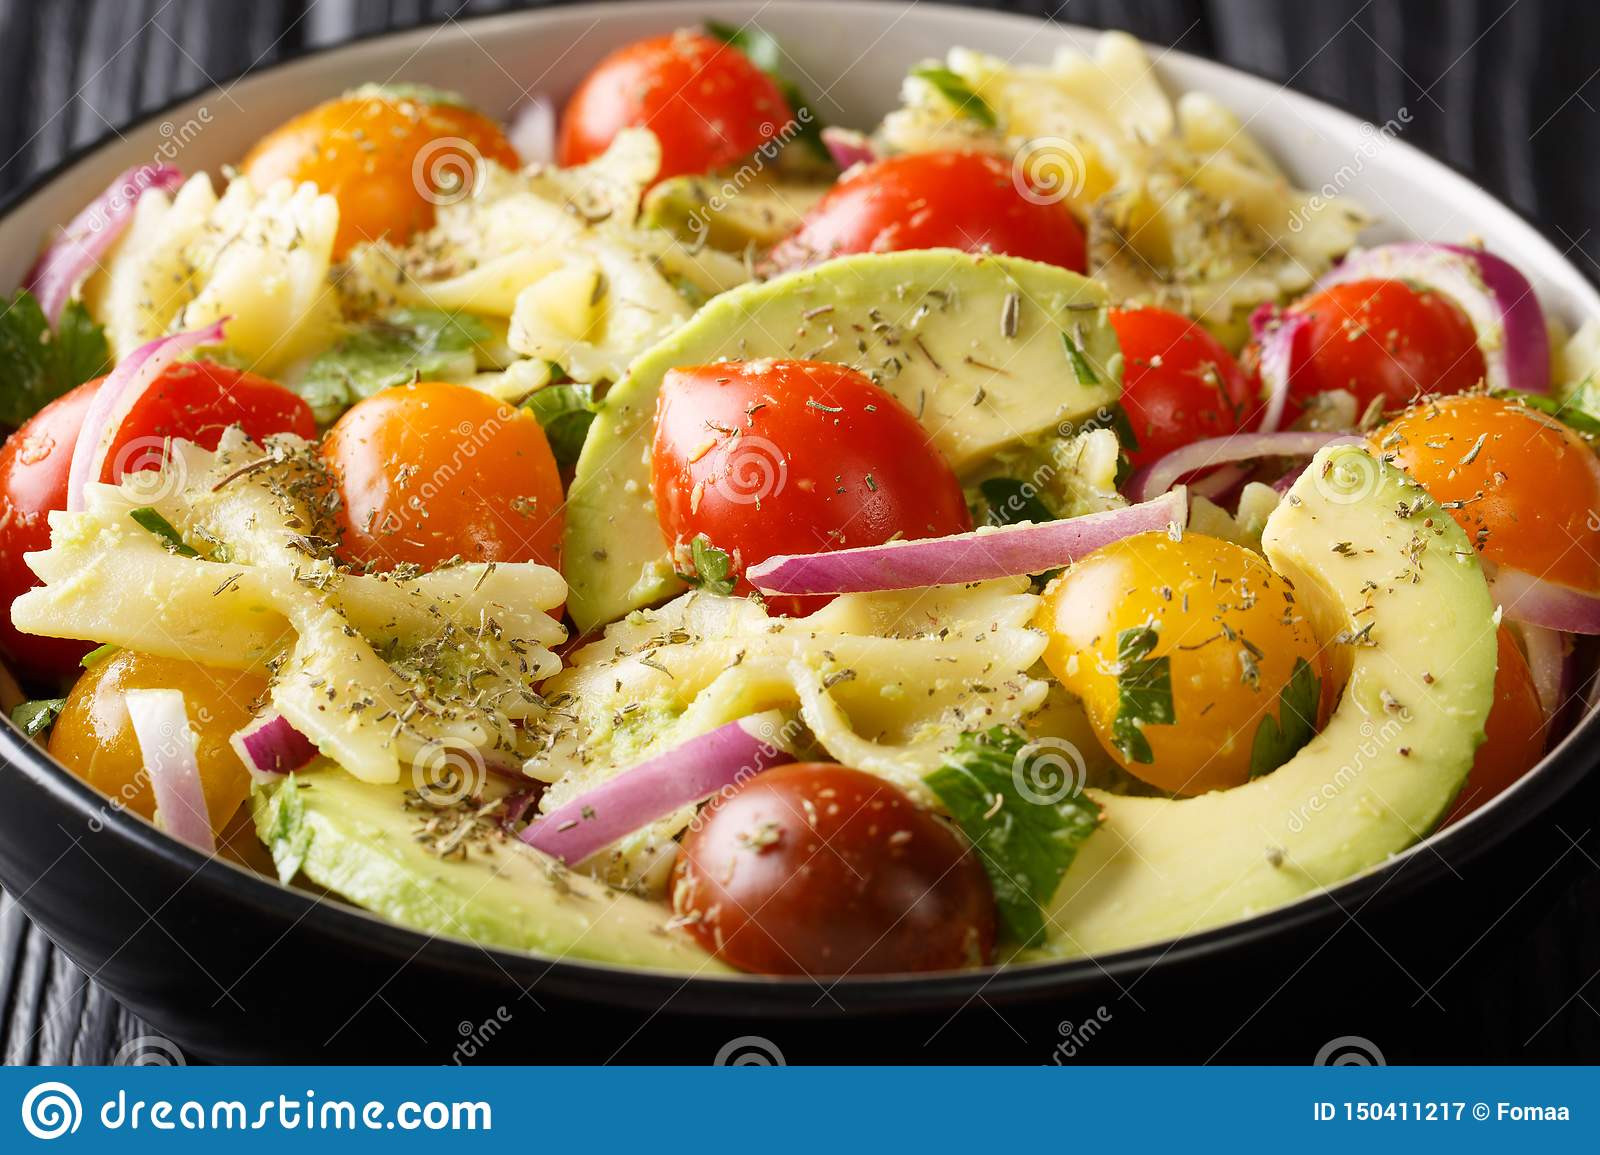 Farfalle Pasta Salad Recipes
 Farfalle Pasta Salad Recipe With Ripe Avocado ions And